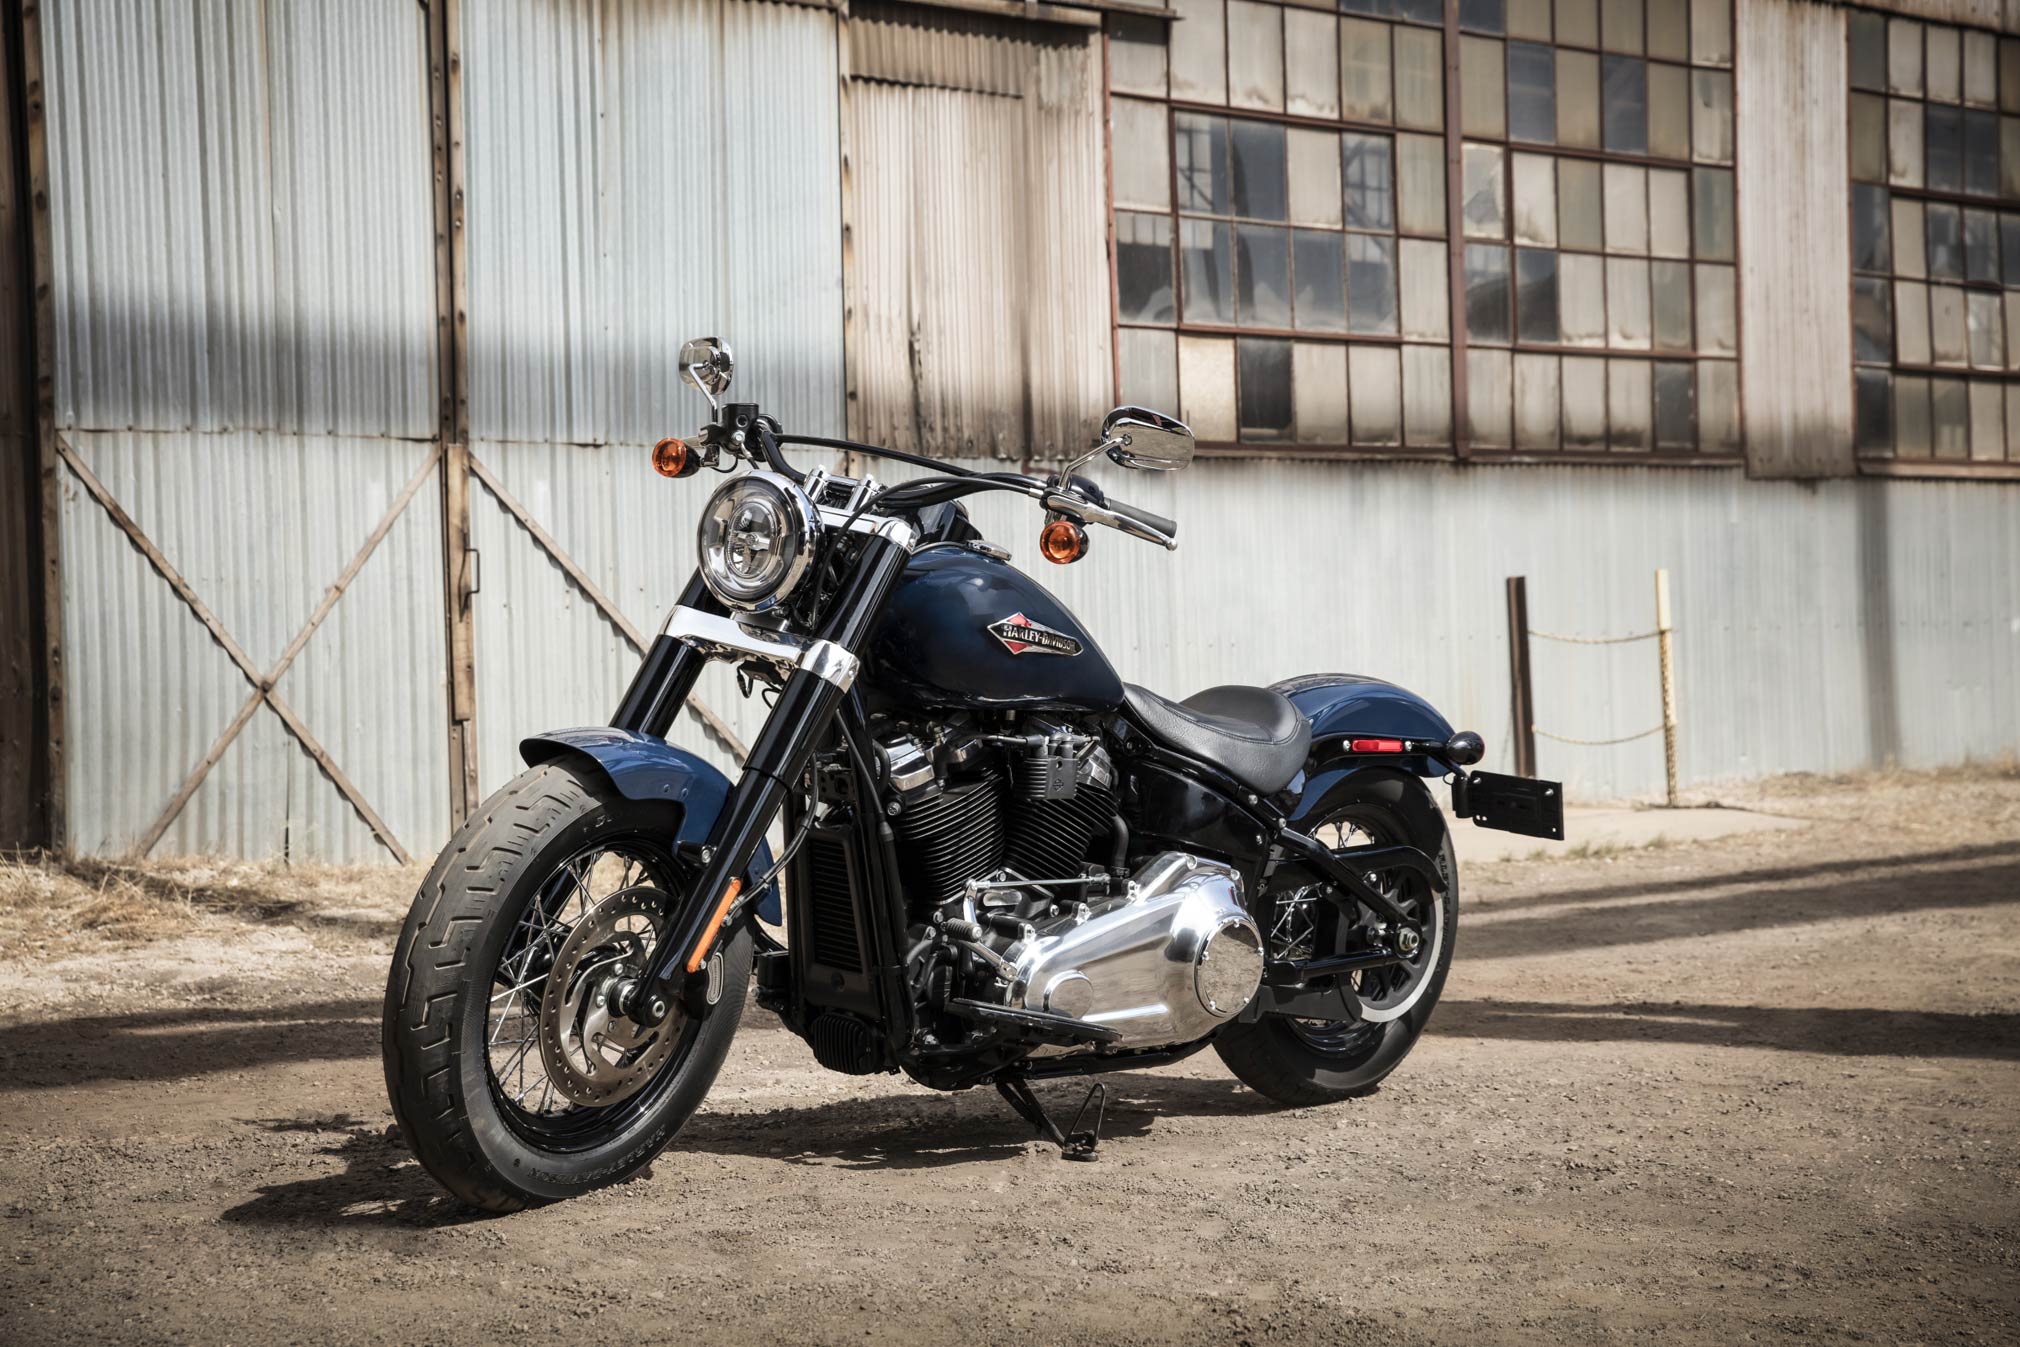 2020 Harley Davidson Softail Slim Guide Total Motorcycle